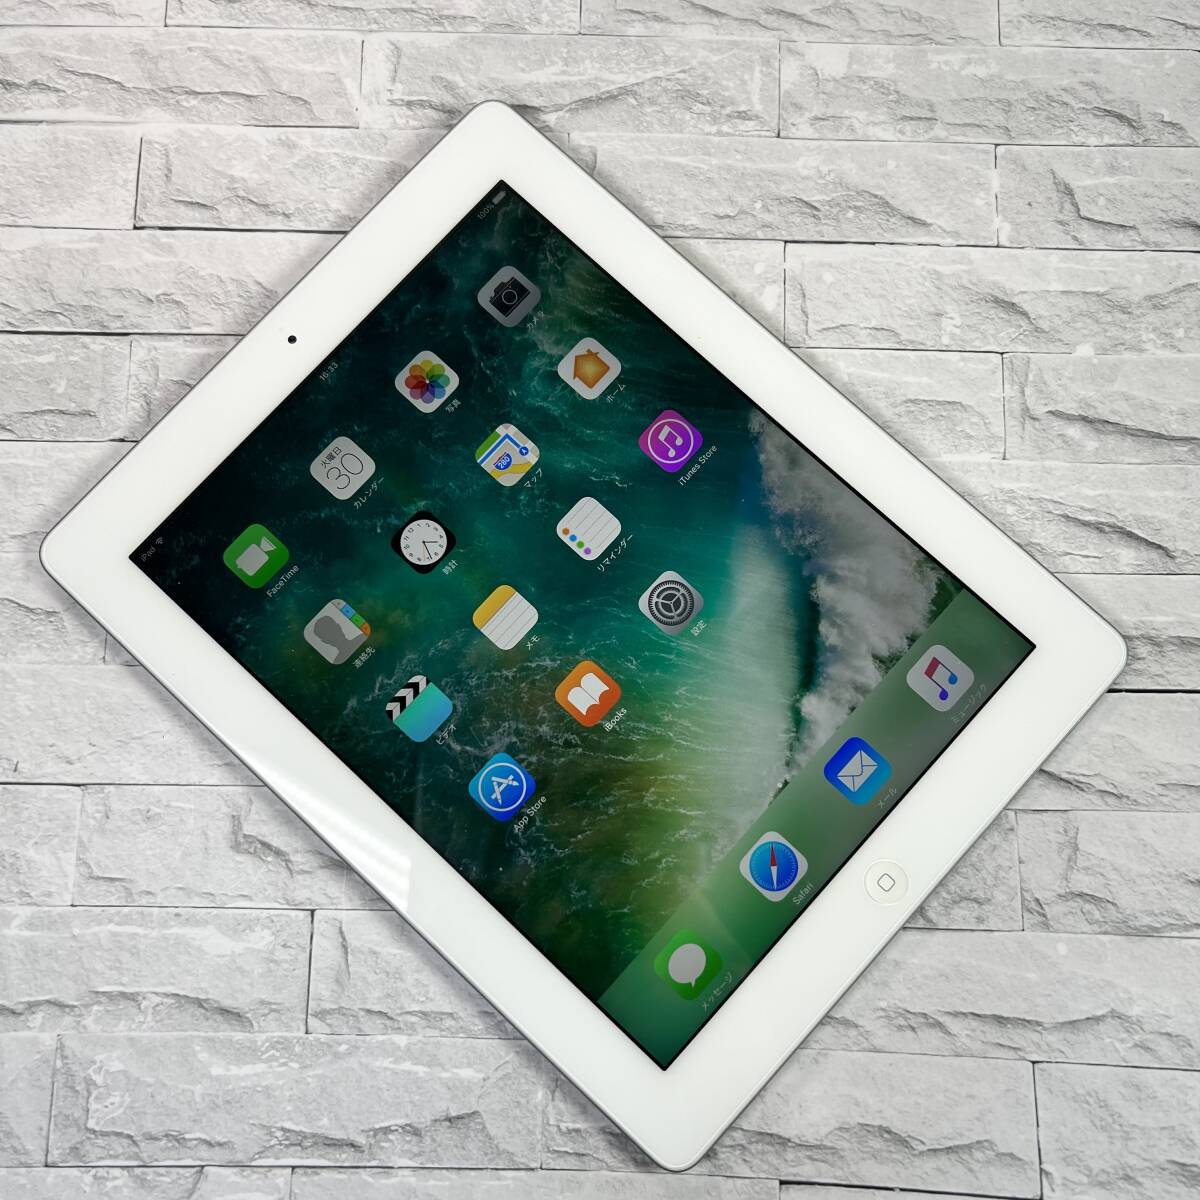 Apple iPad Retina дисплей Wi-Fi модель 16GB MD513J/A